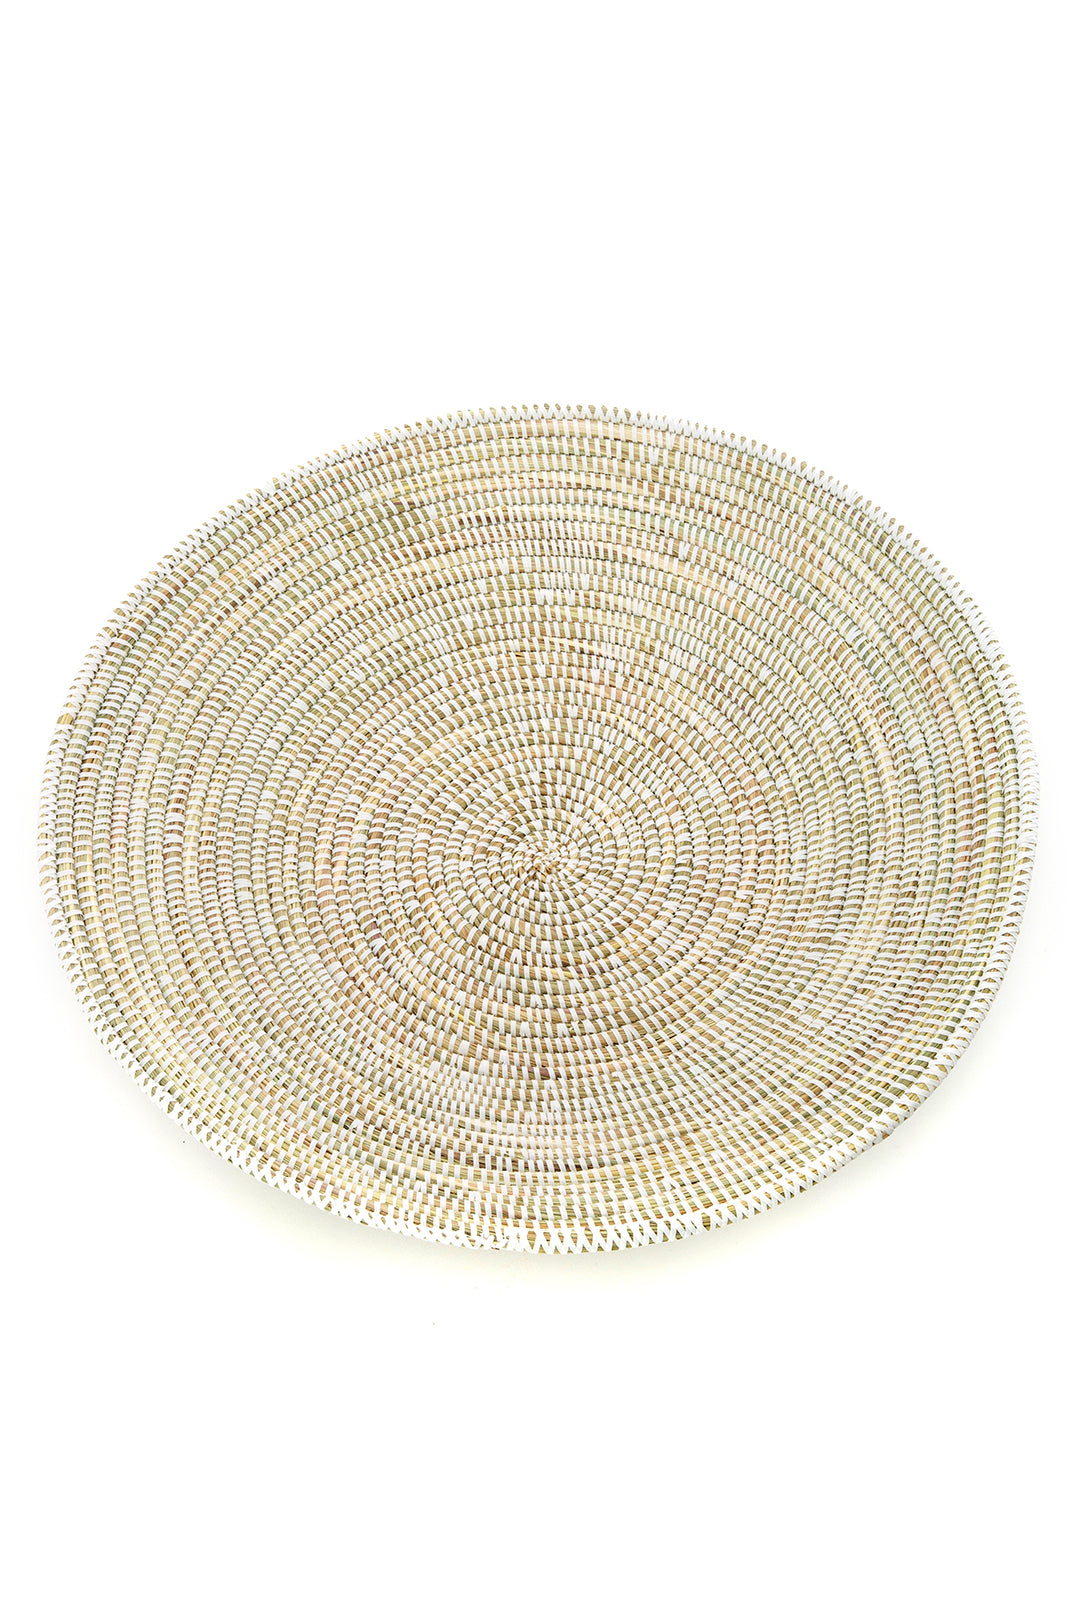 Large White Grain Table Basket from Senegal